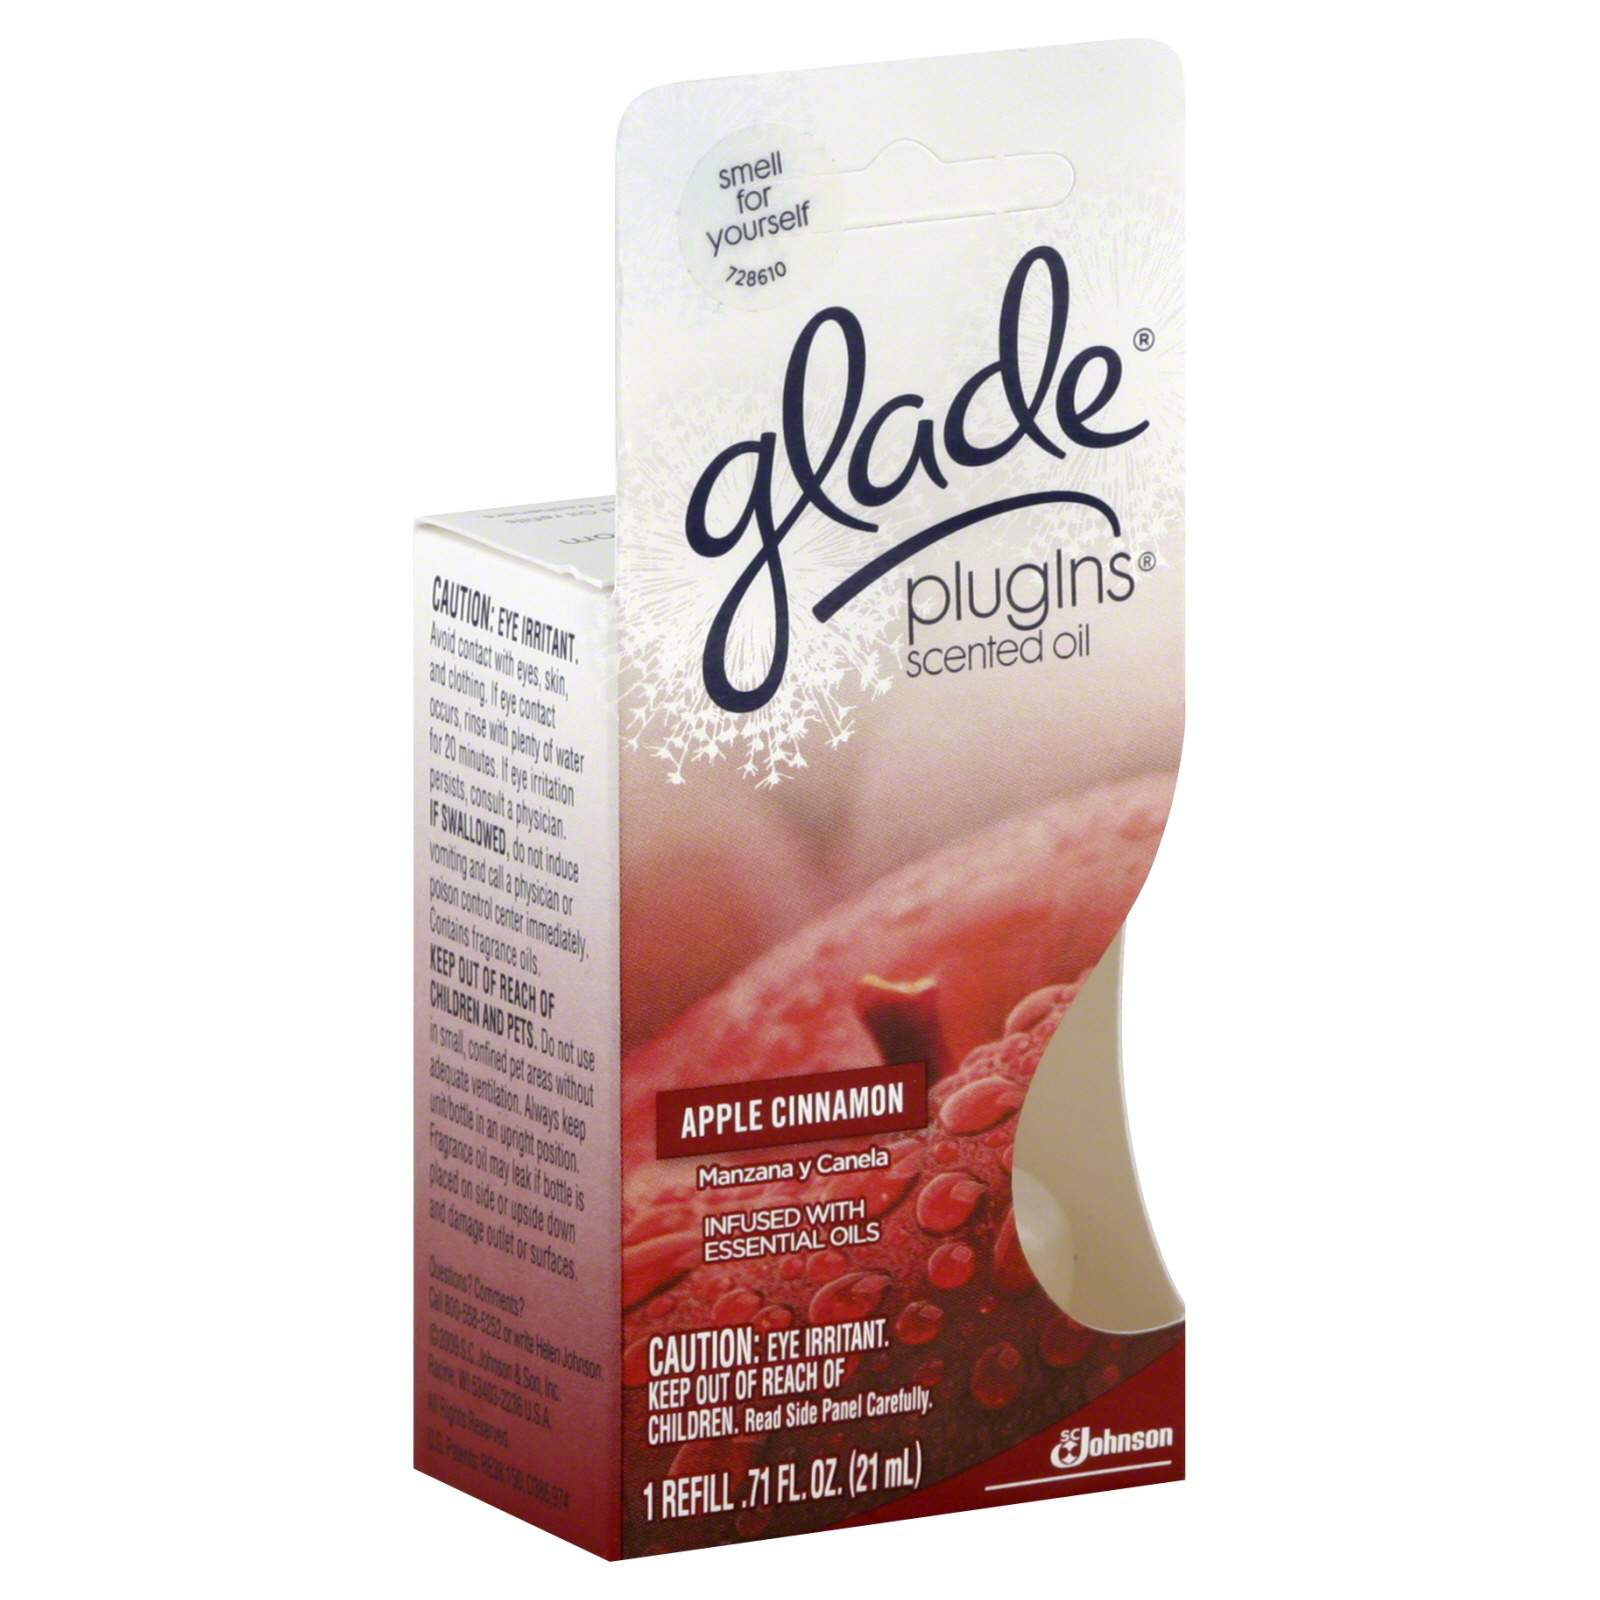 Glade PlugIns Scented Oil Refill, Apple Cinnamon, 1 refill [0.71 fl oz (21 ml)]